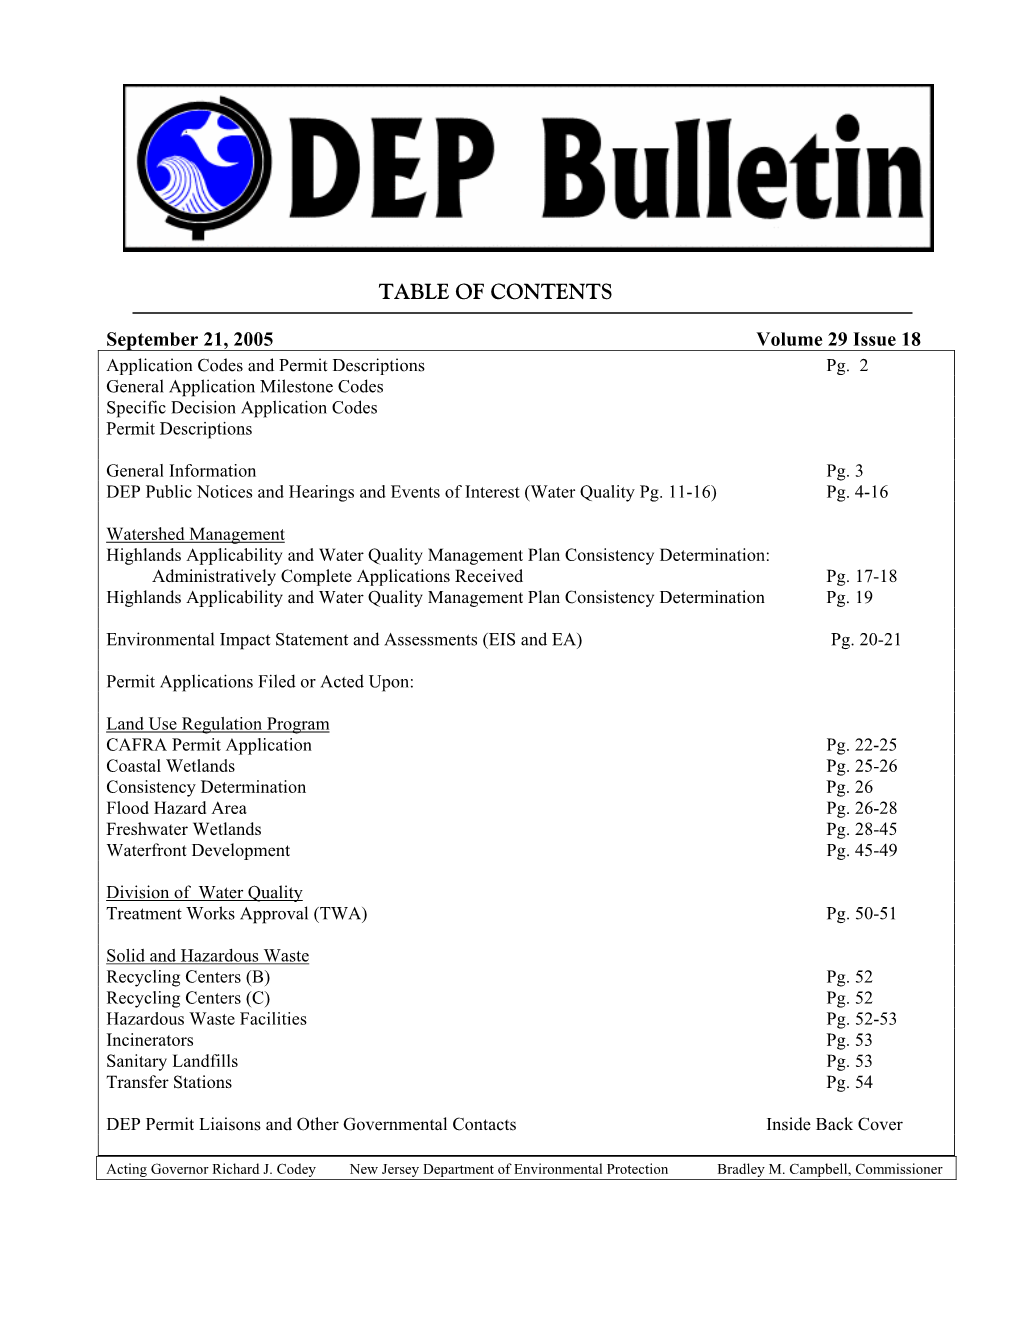 NJDEP-DEP Bulletin, 9/21/2005 Issue